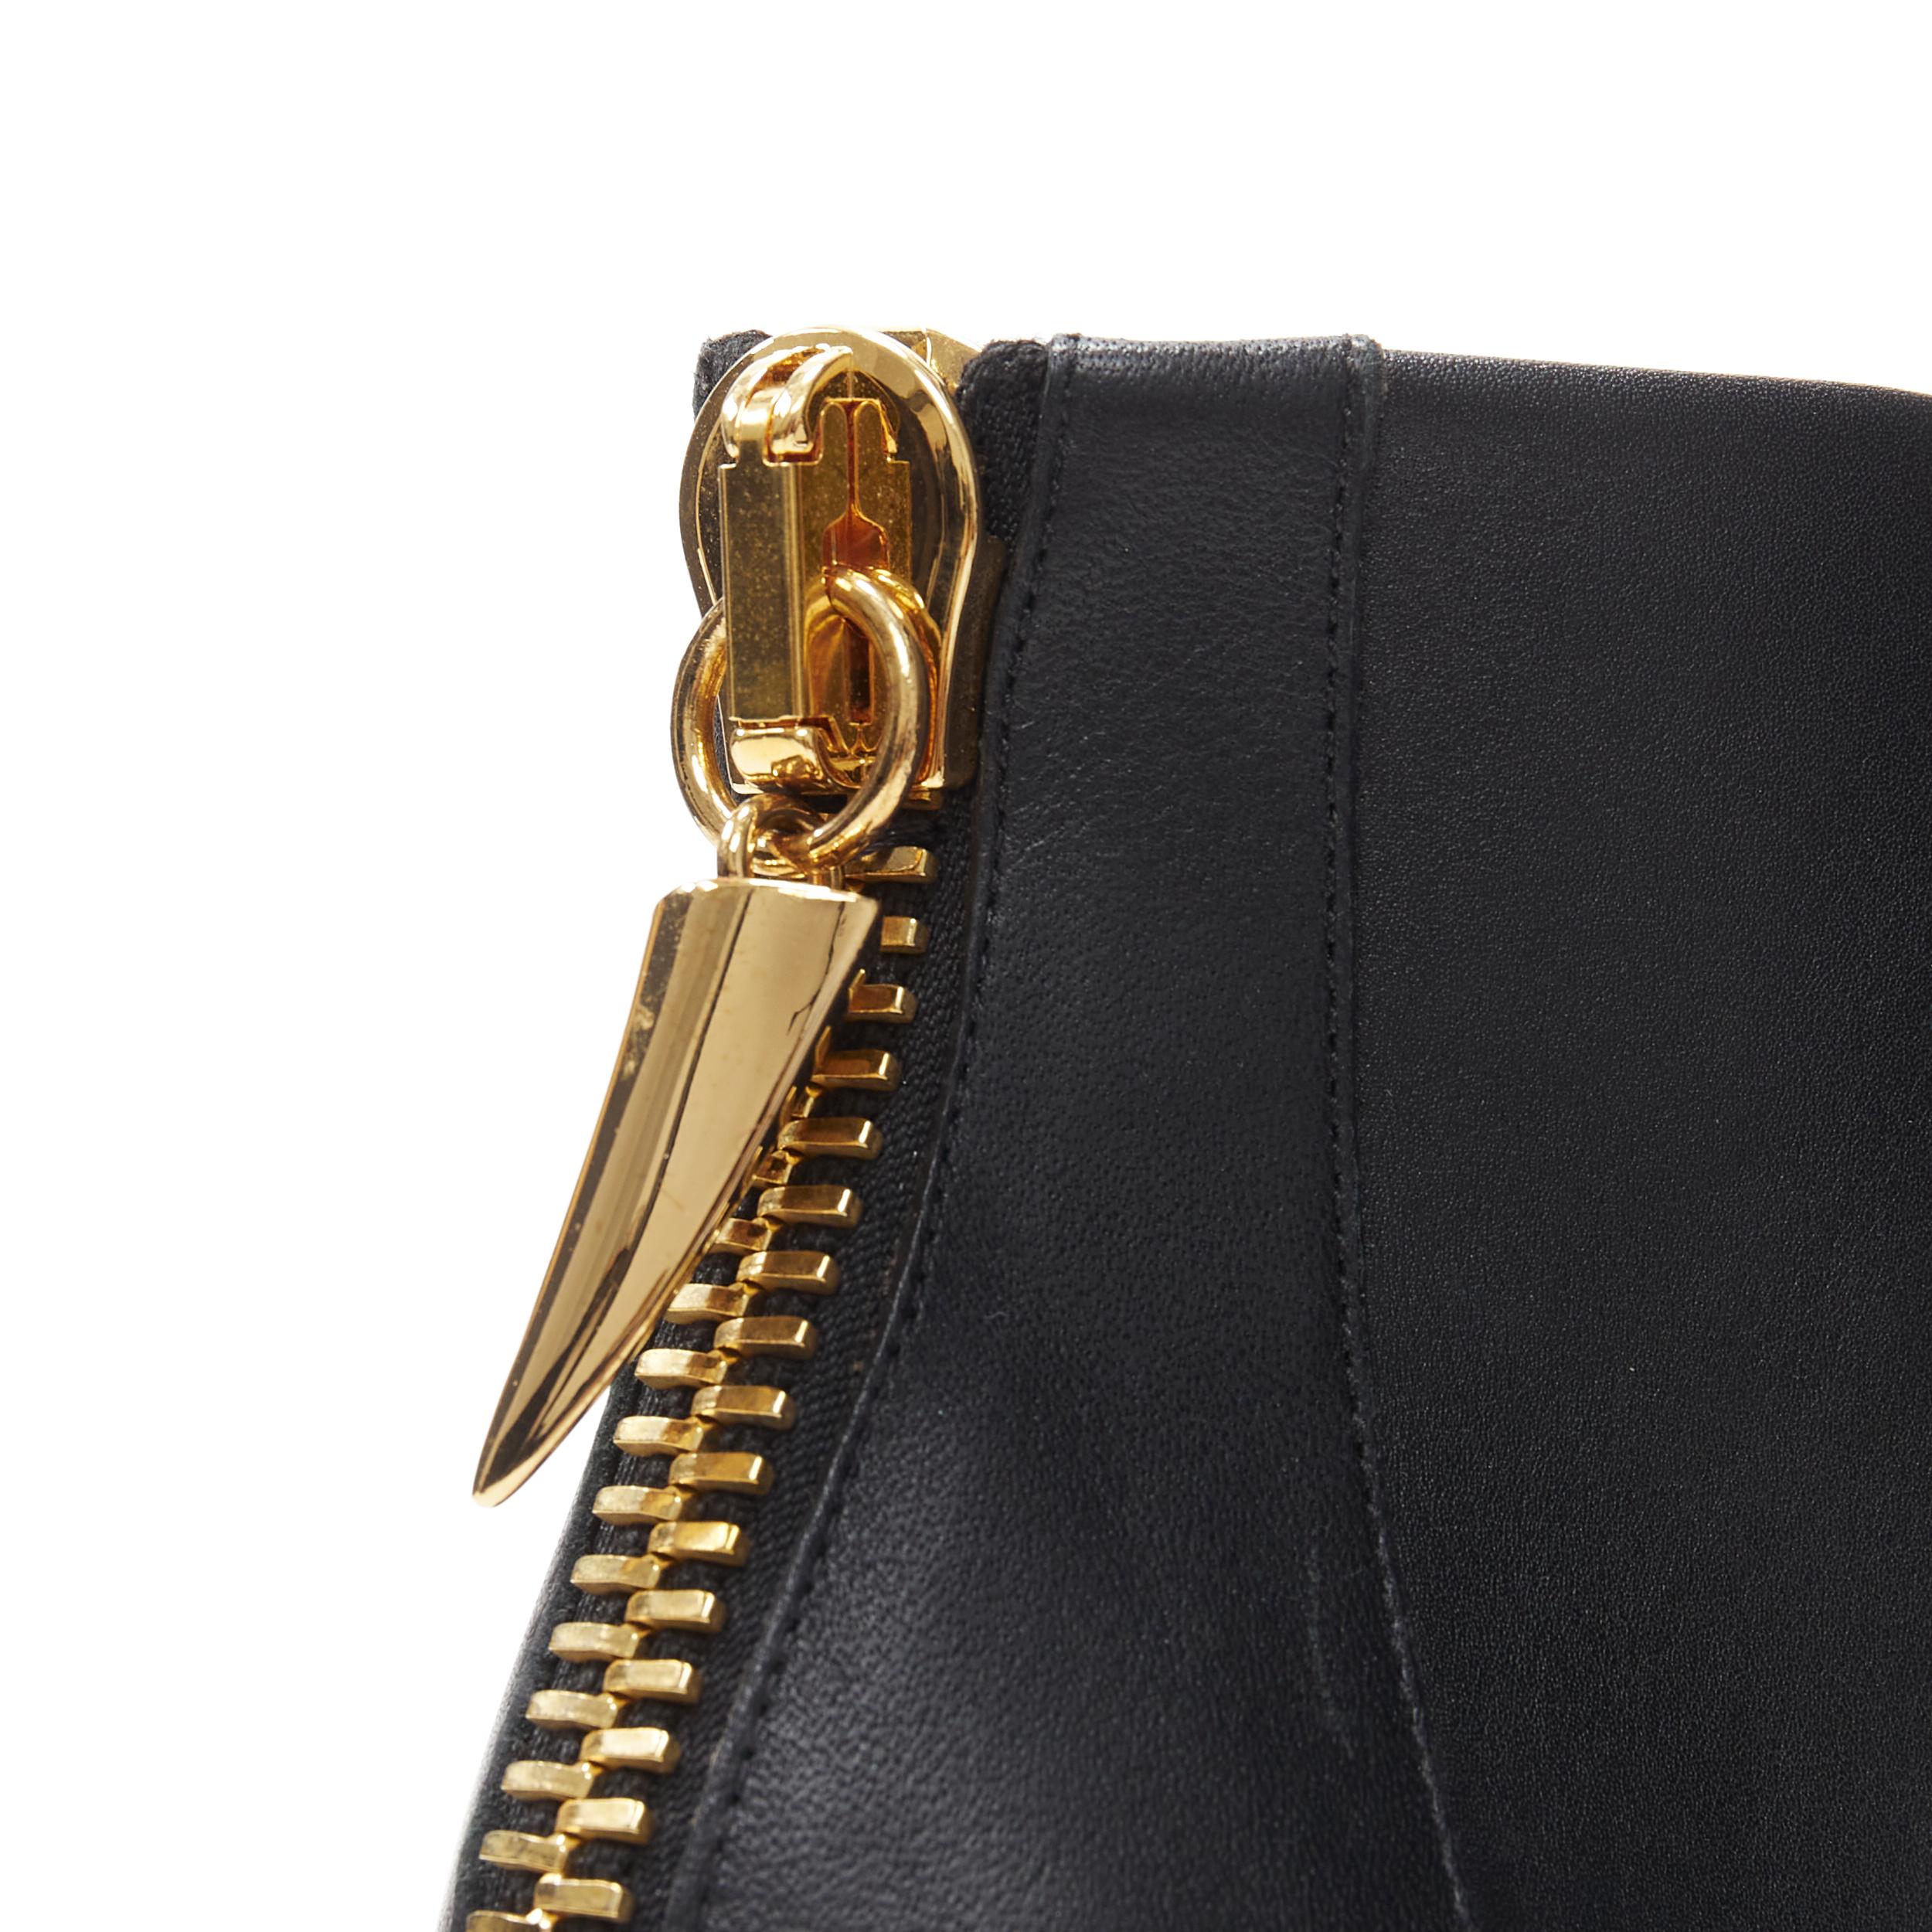 Women's new GIUSEPPE ZANOTTI black leather gold claw zip point toe bootie EU37.5